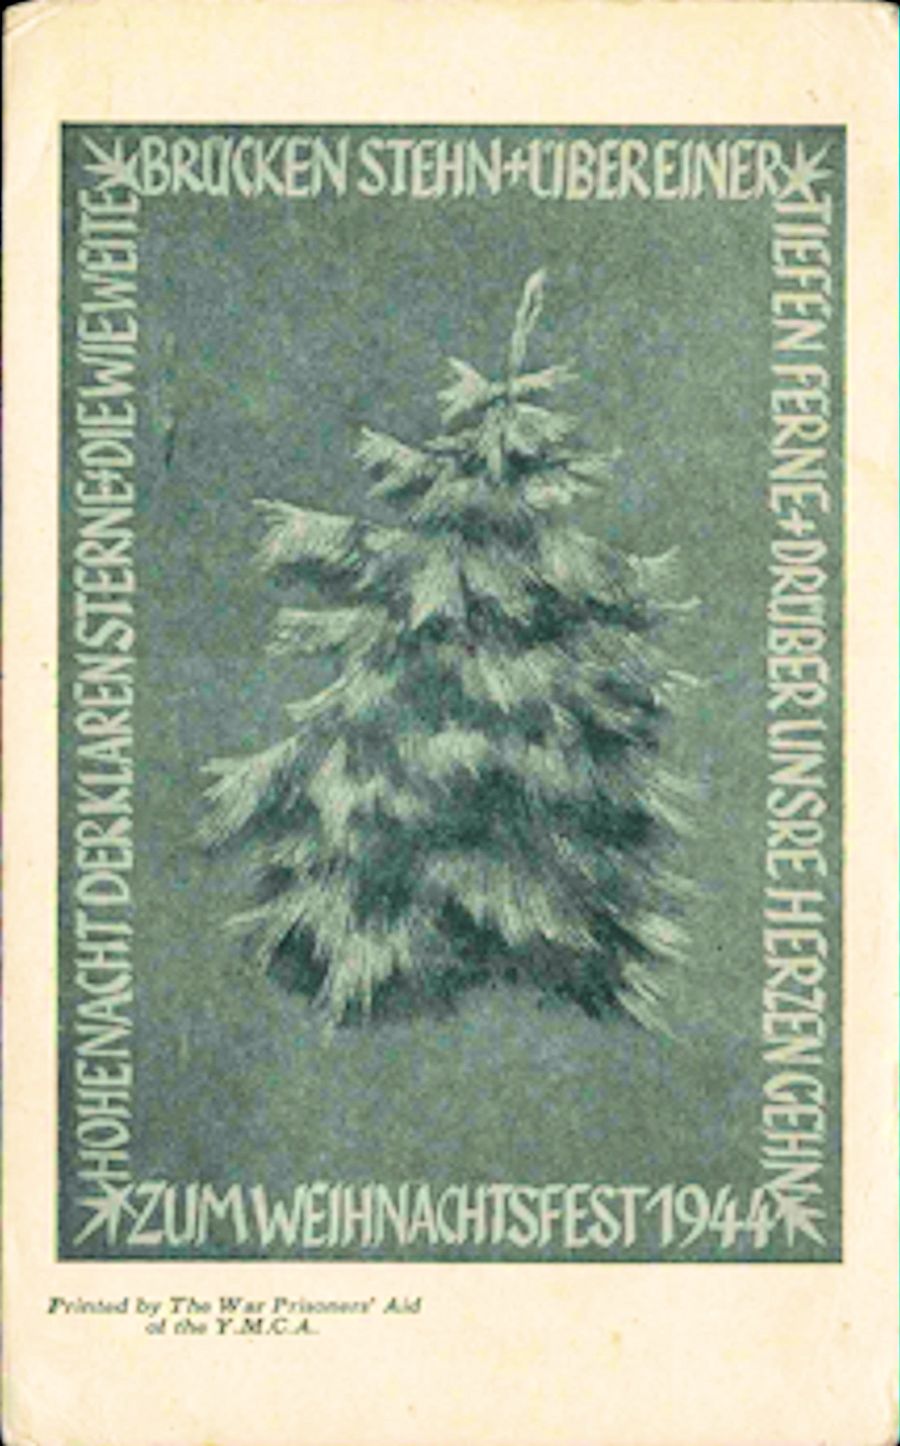 
1943;Canada;The War Prisoners Aid of the YMCA ; WW II-Era Christmas POW Card